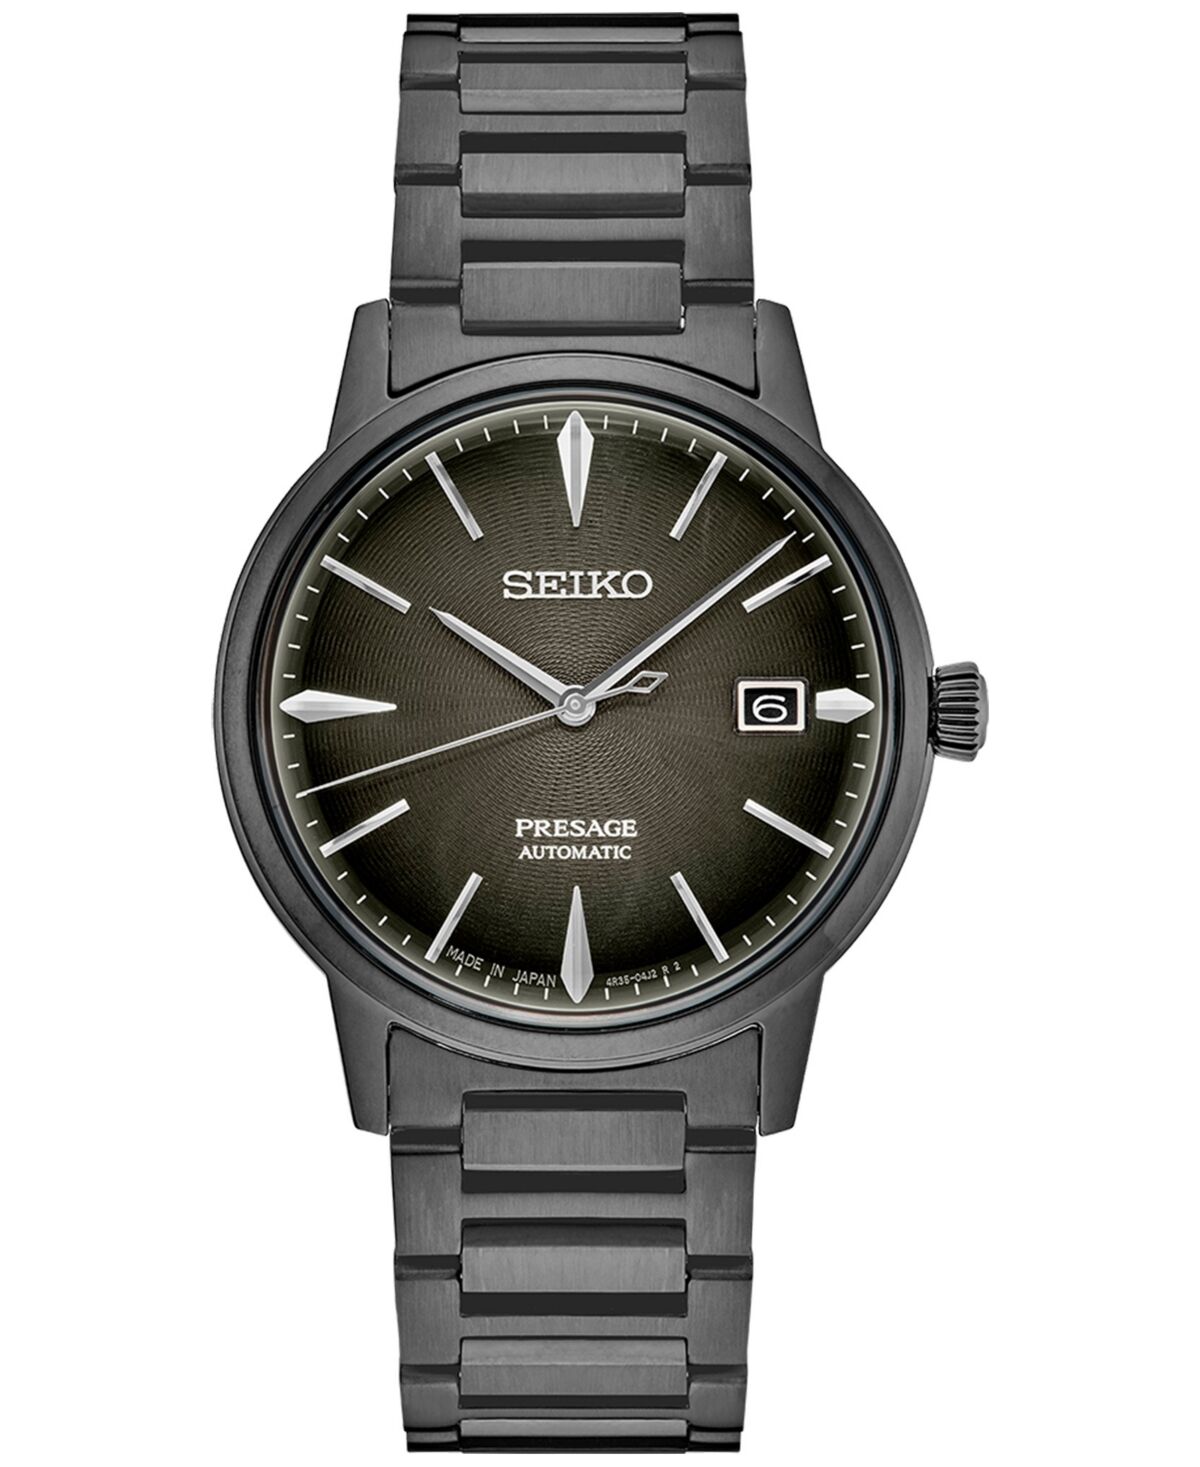 Seiko Men's Automatic Presage Black Ion Finish Stainless Steel Bracelet Watch 40mm - Black